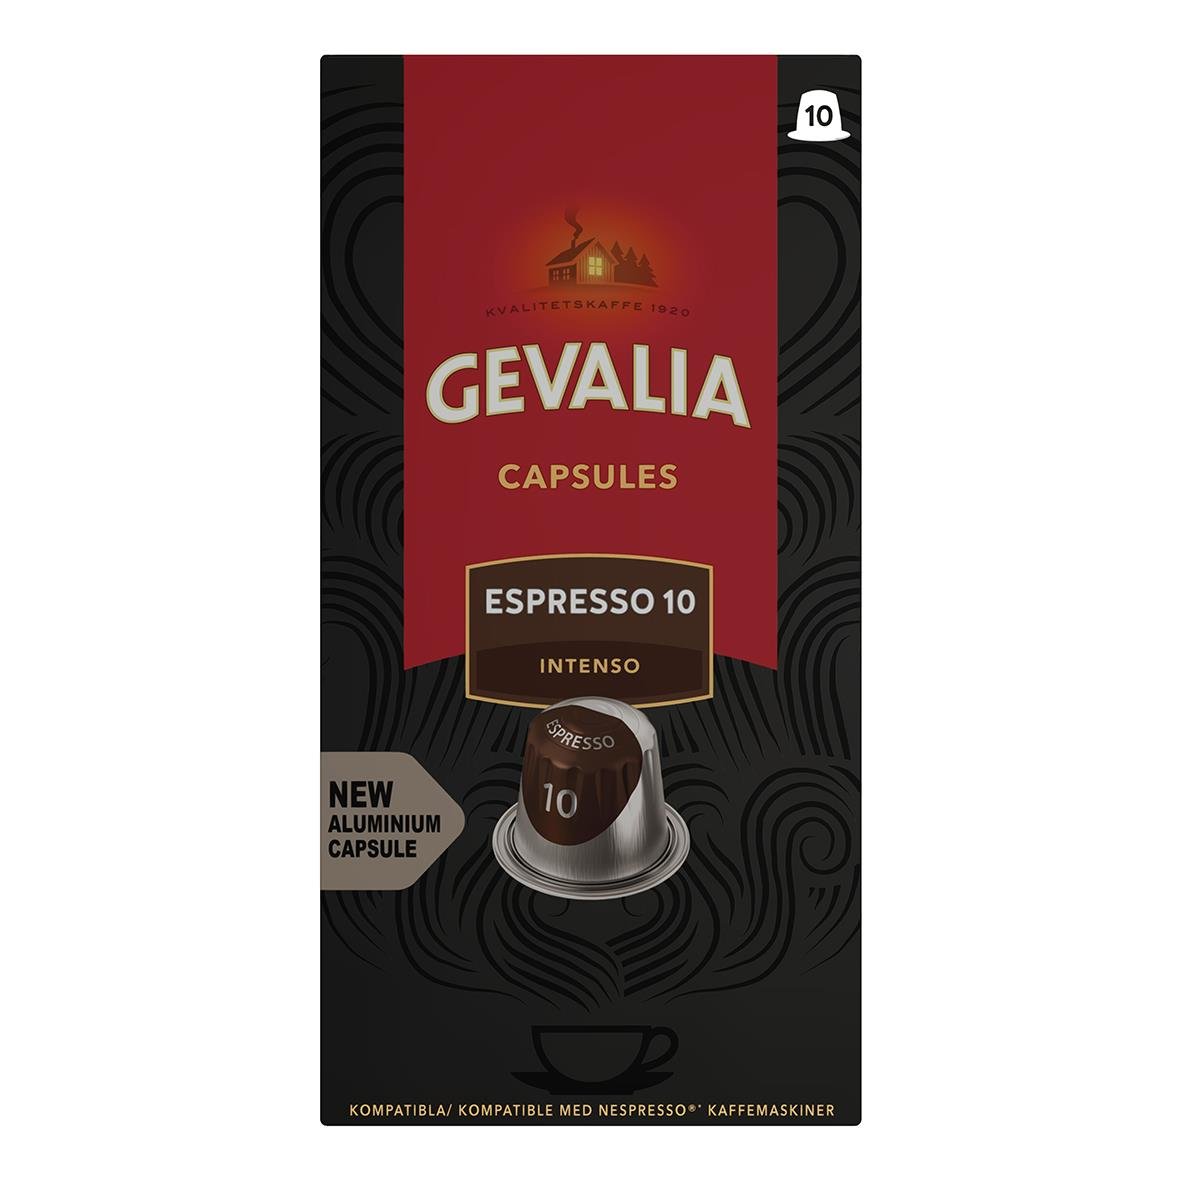 Kaffekapslar Gevalia Espresso 10 Intenso